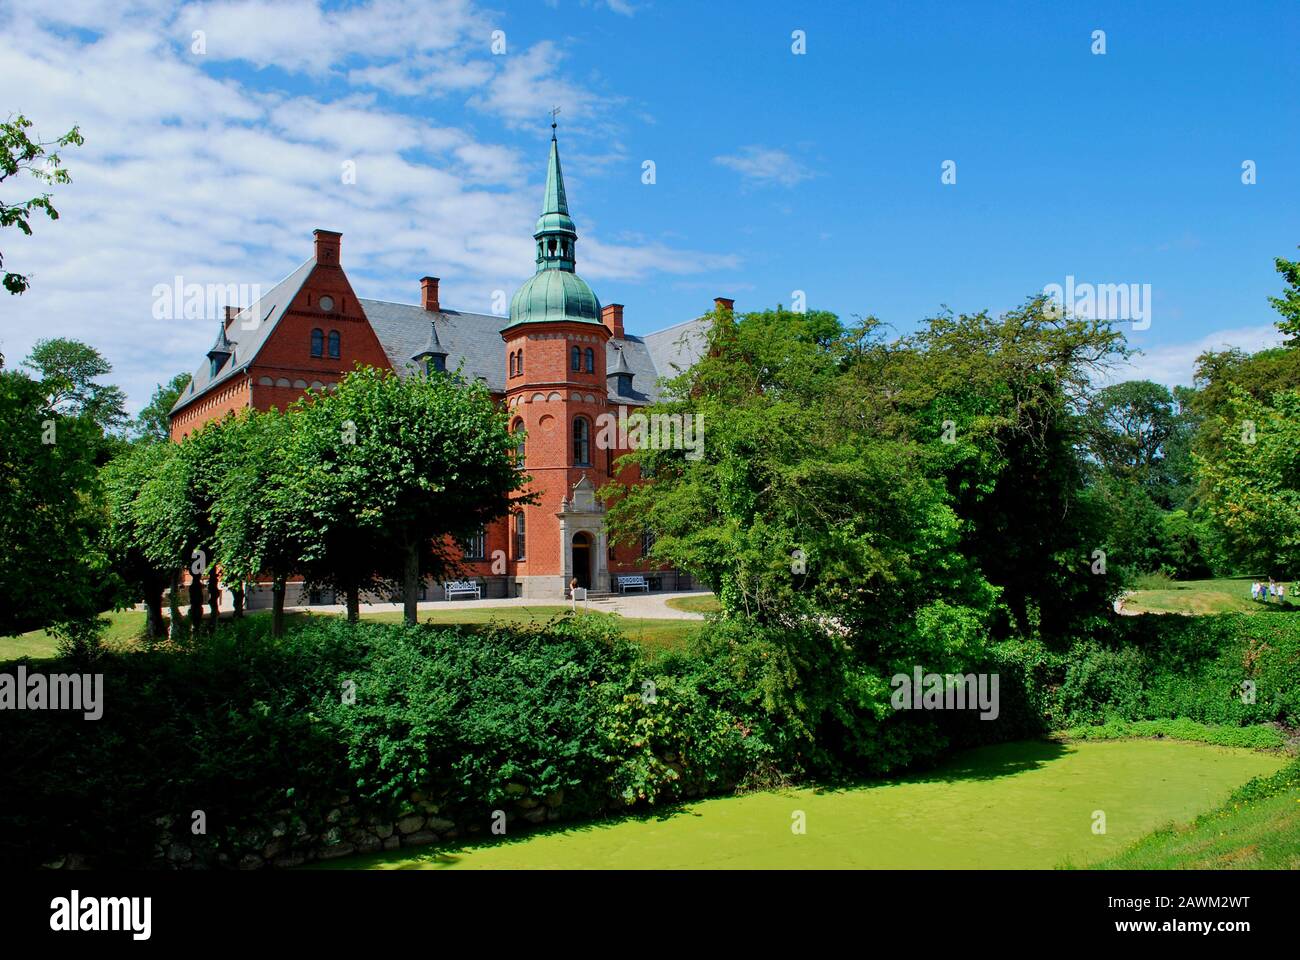 Skovsgaard gard,  Langeland island, Funen, Denmark, Scandinavia, Europe Stock Photo